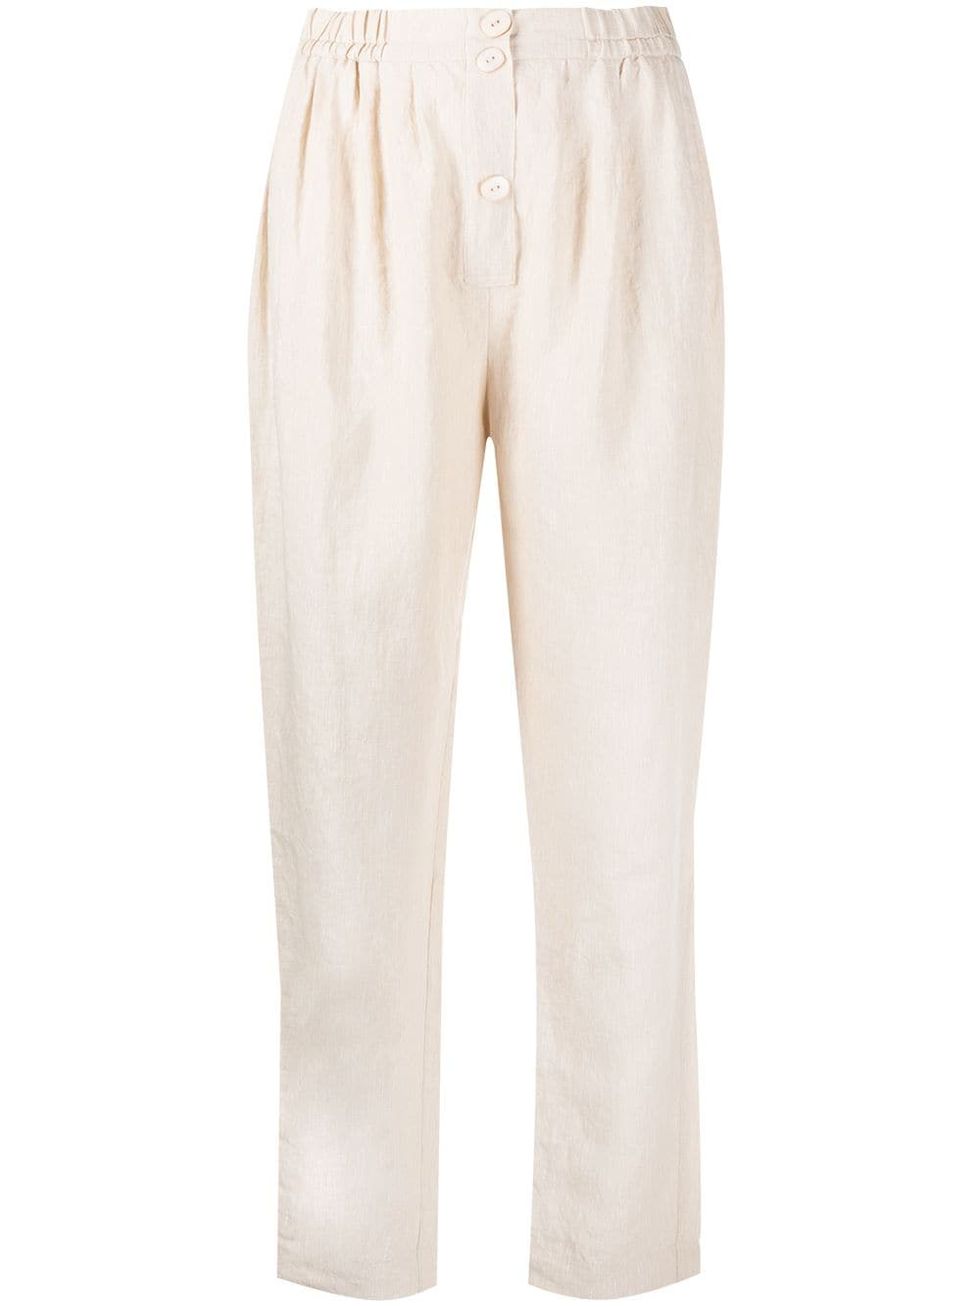 It's Officially Linen Pants Season